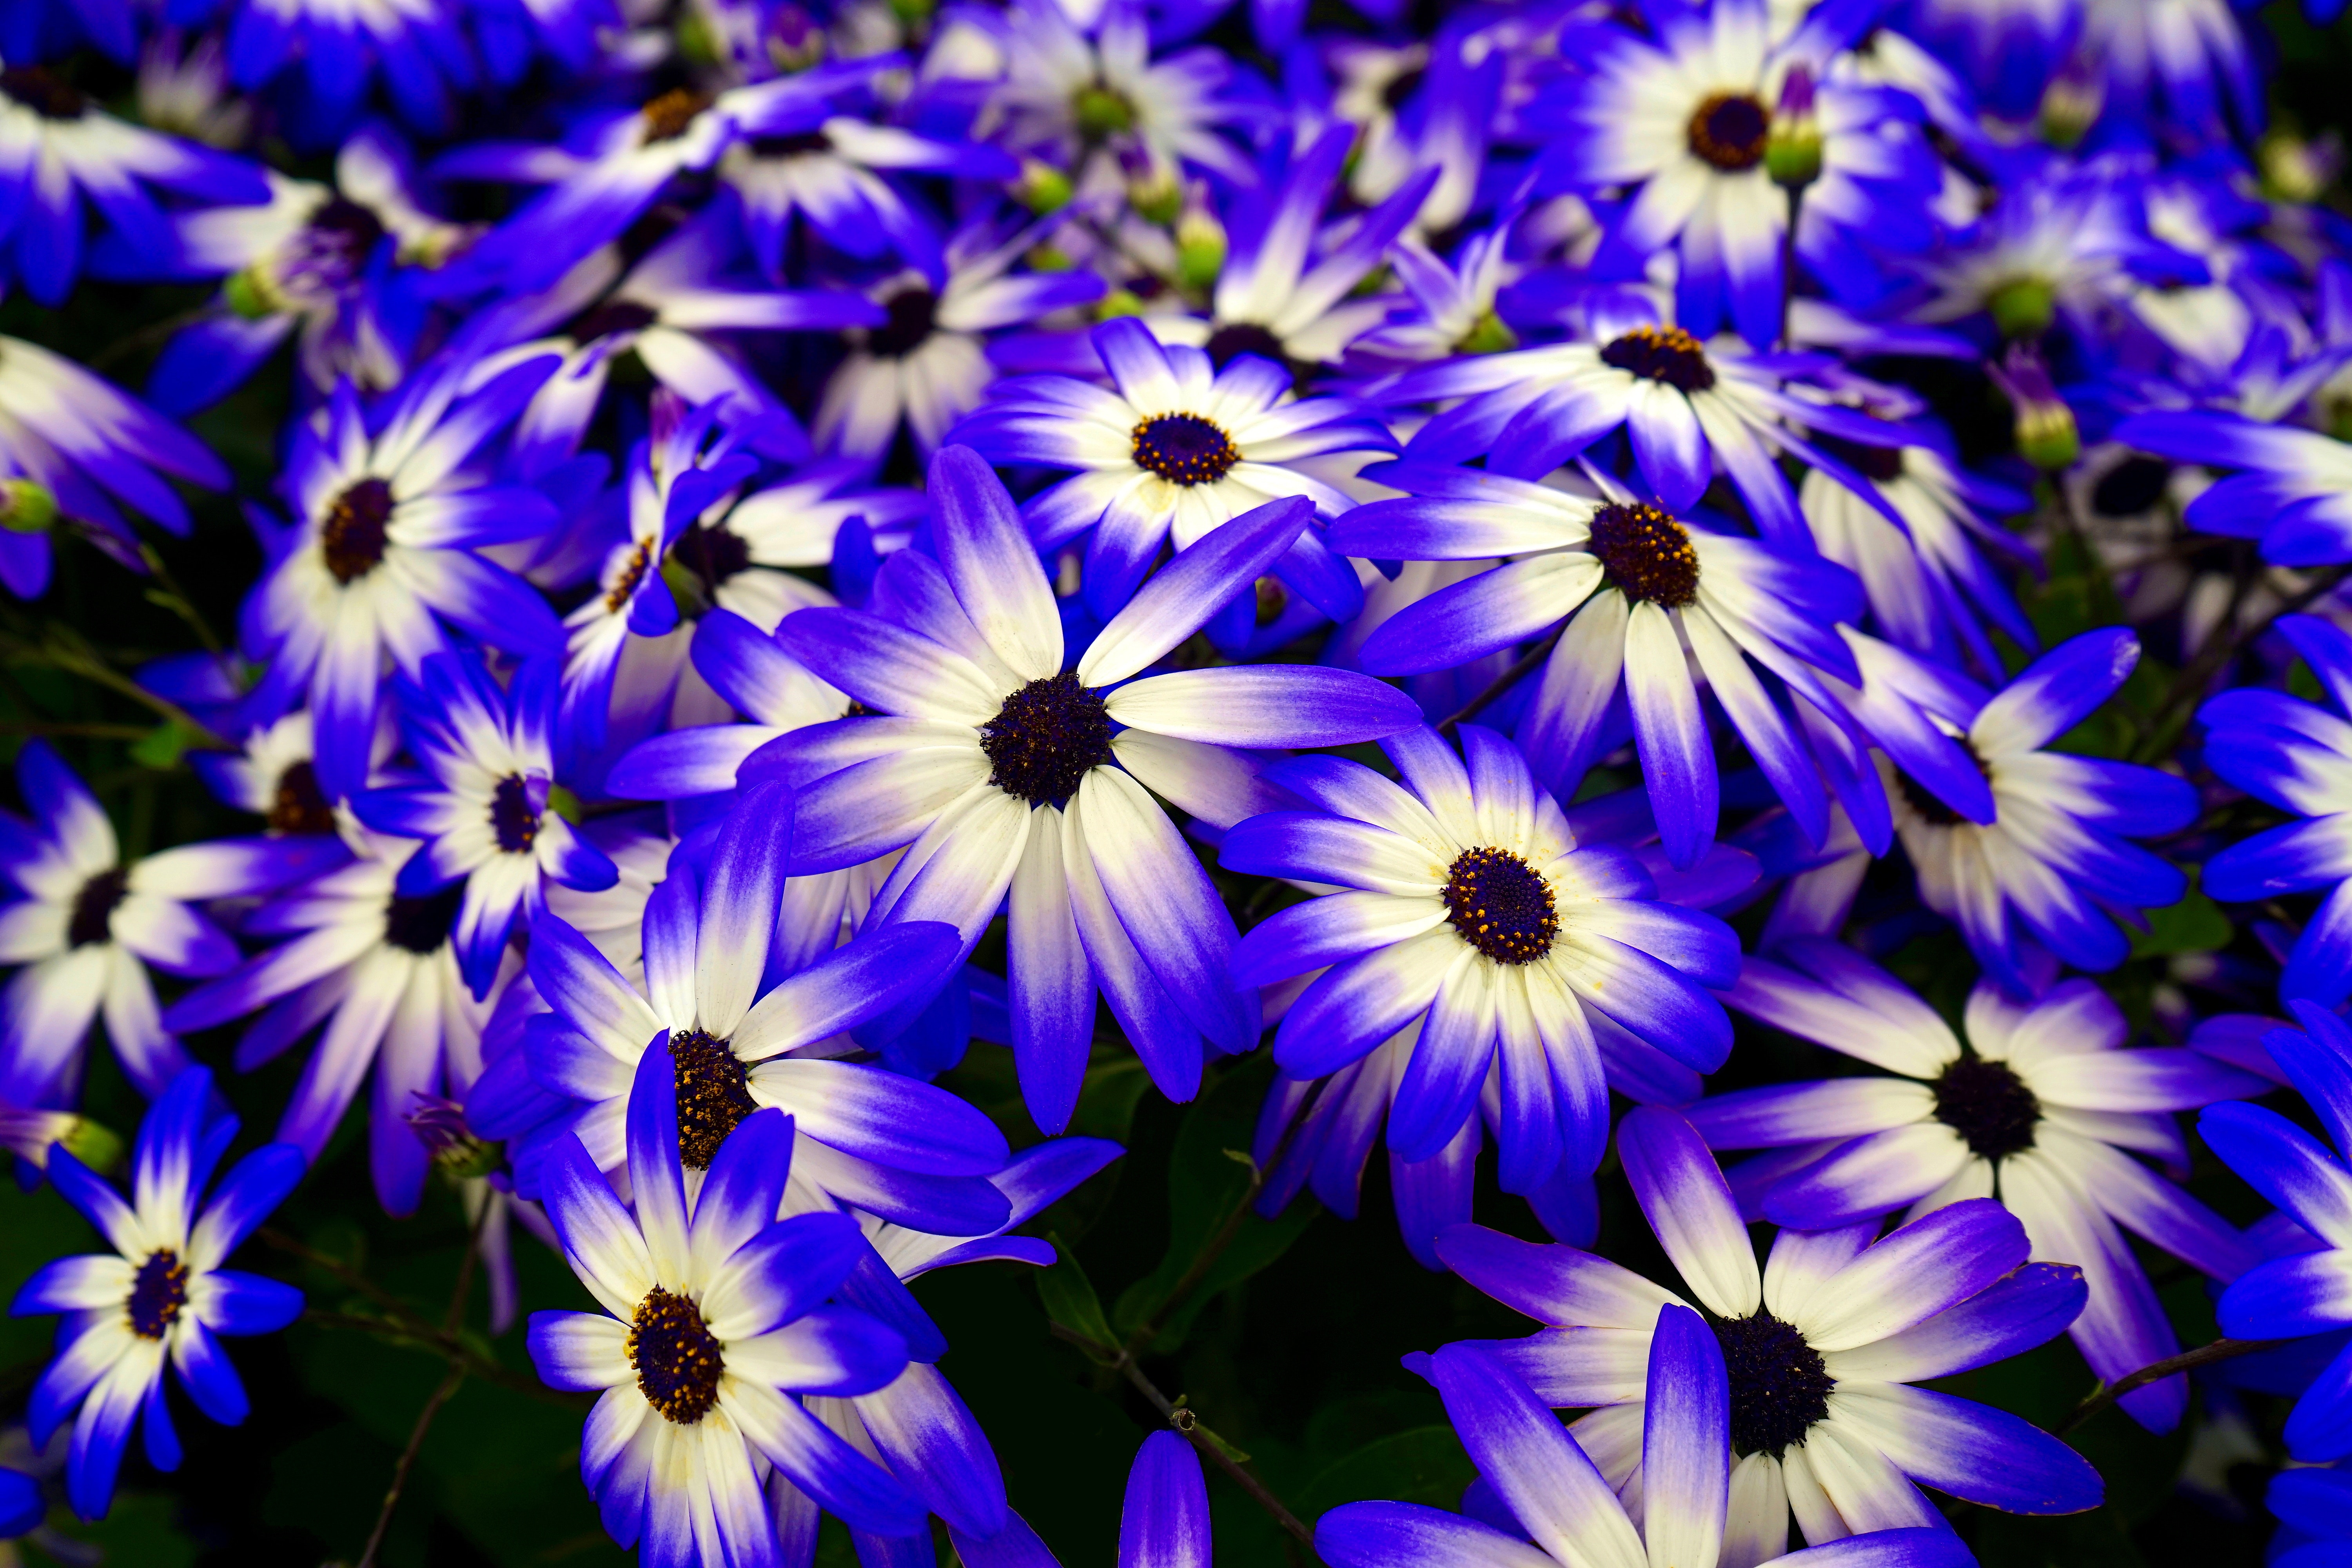 120052 descargar imagen cama de flores, flores, parterre, púrpura, morado, osteospermum: fondos de pantalla y protectores de pantalla gratis